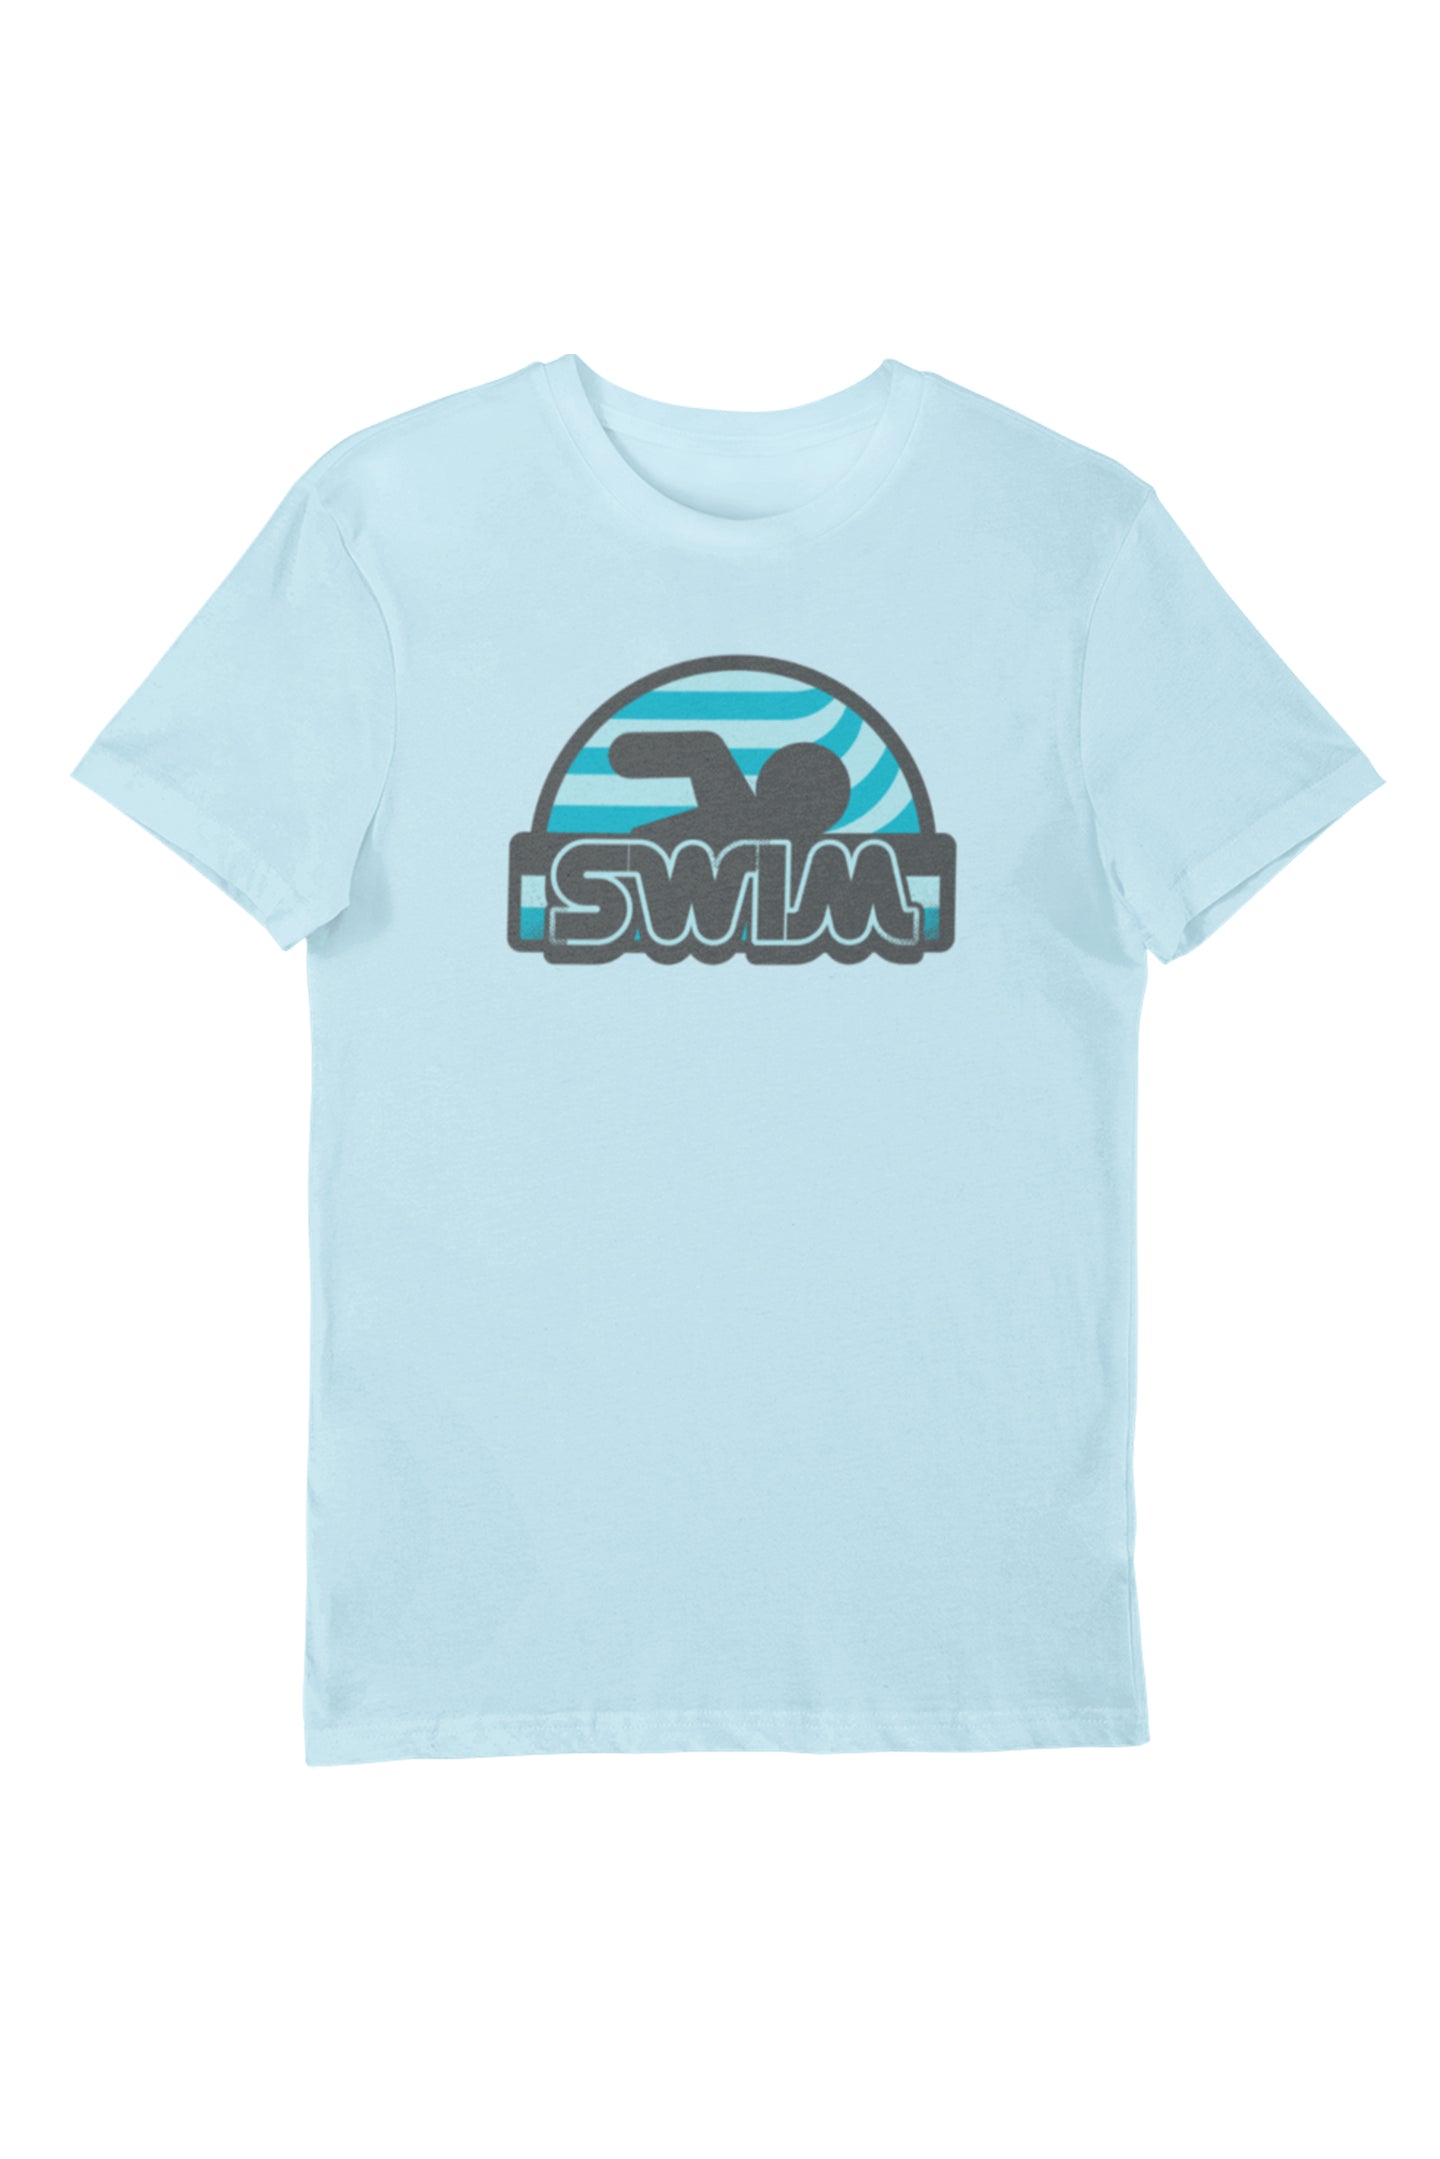 Swim - Men's